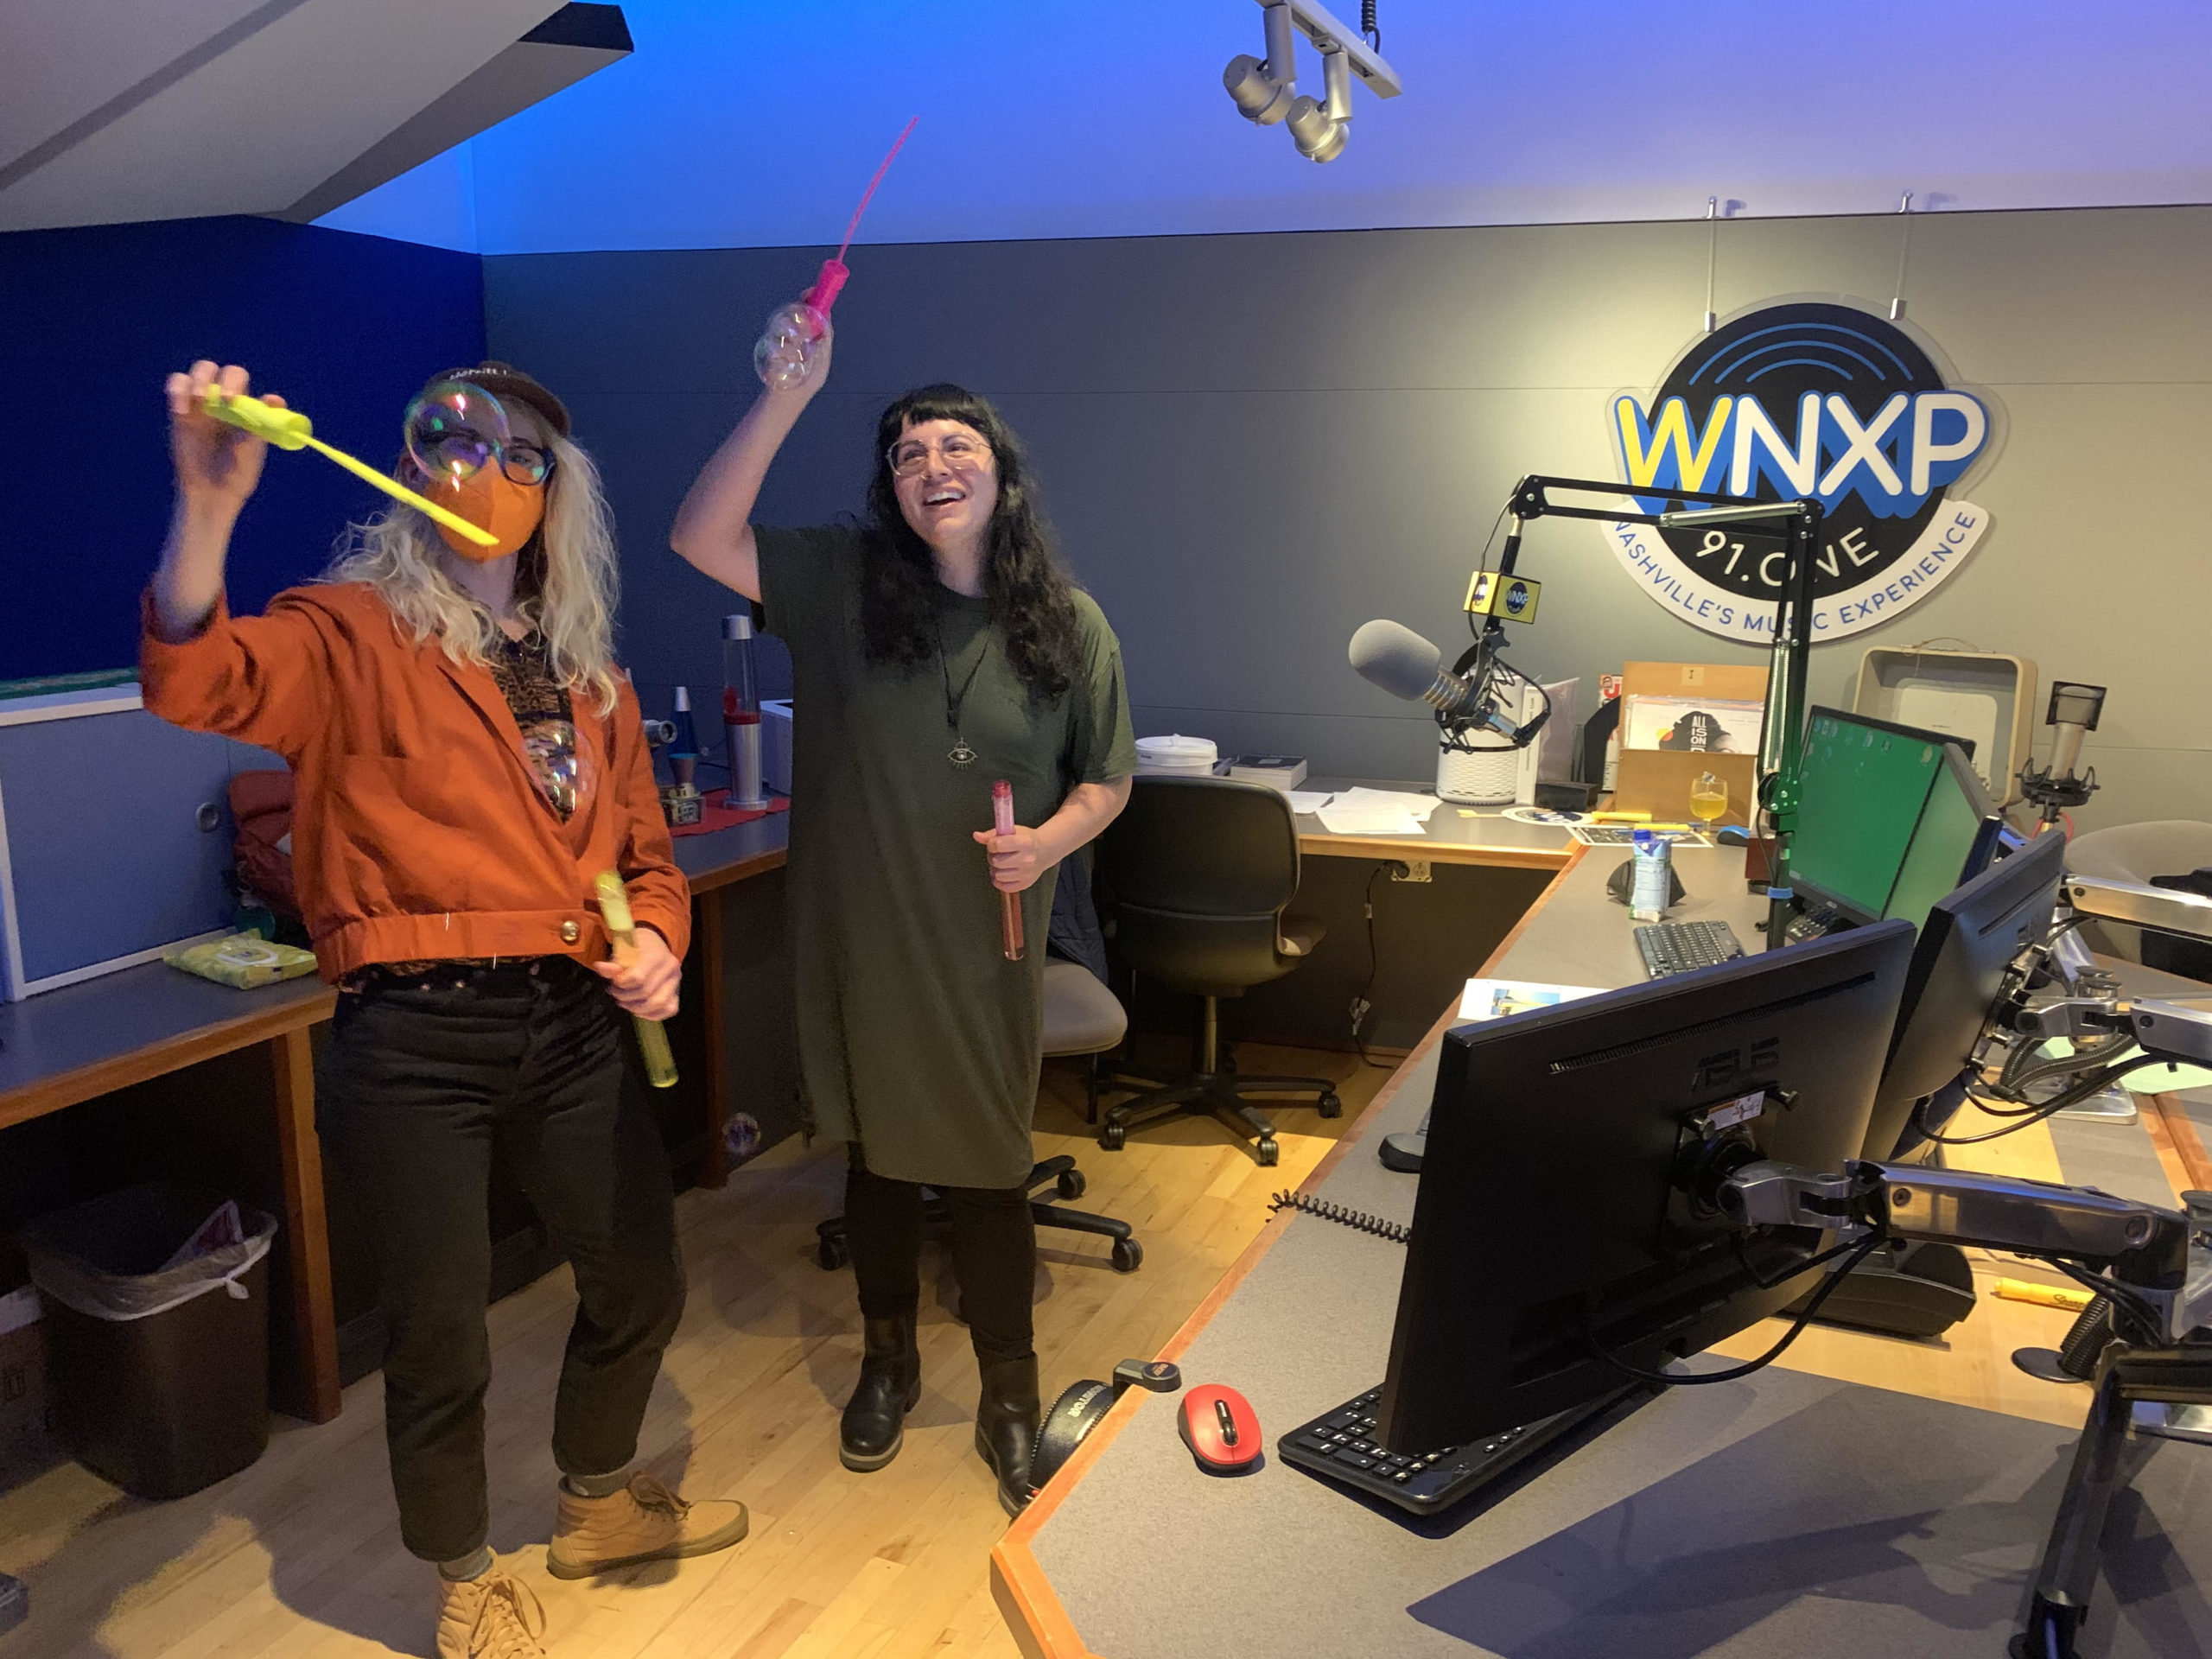 Jewly Hight (left), Ayisha Jaffer (right) having fun in the WNXP Studios